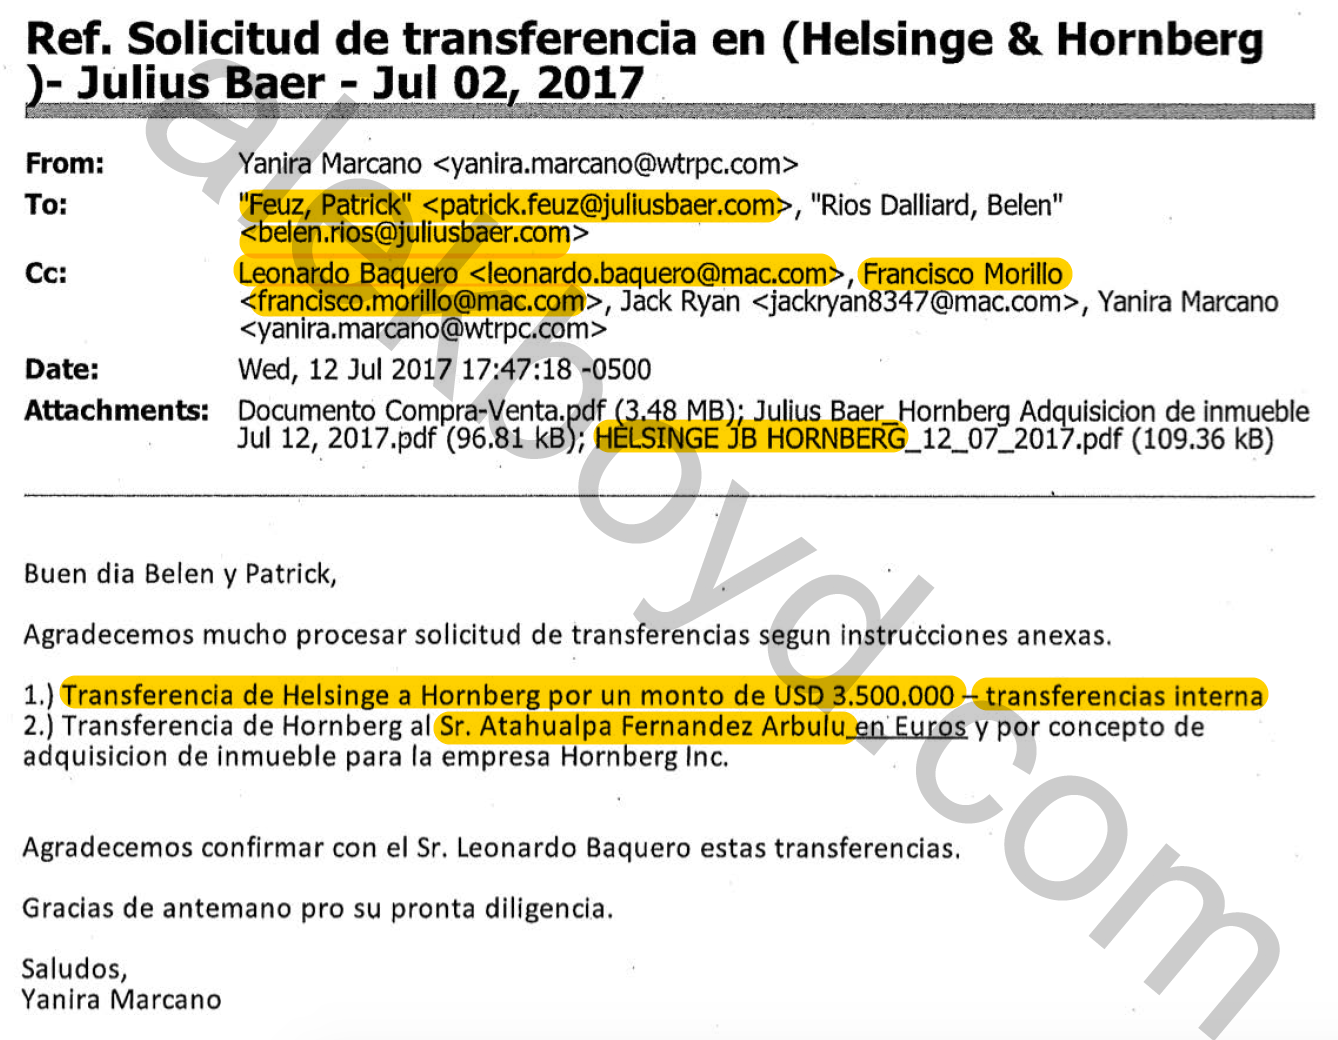 Helsinge pays $3 million bribe to Atahualpa Fernandez